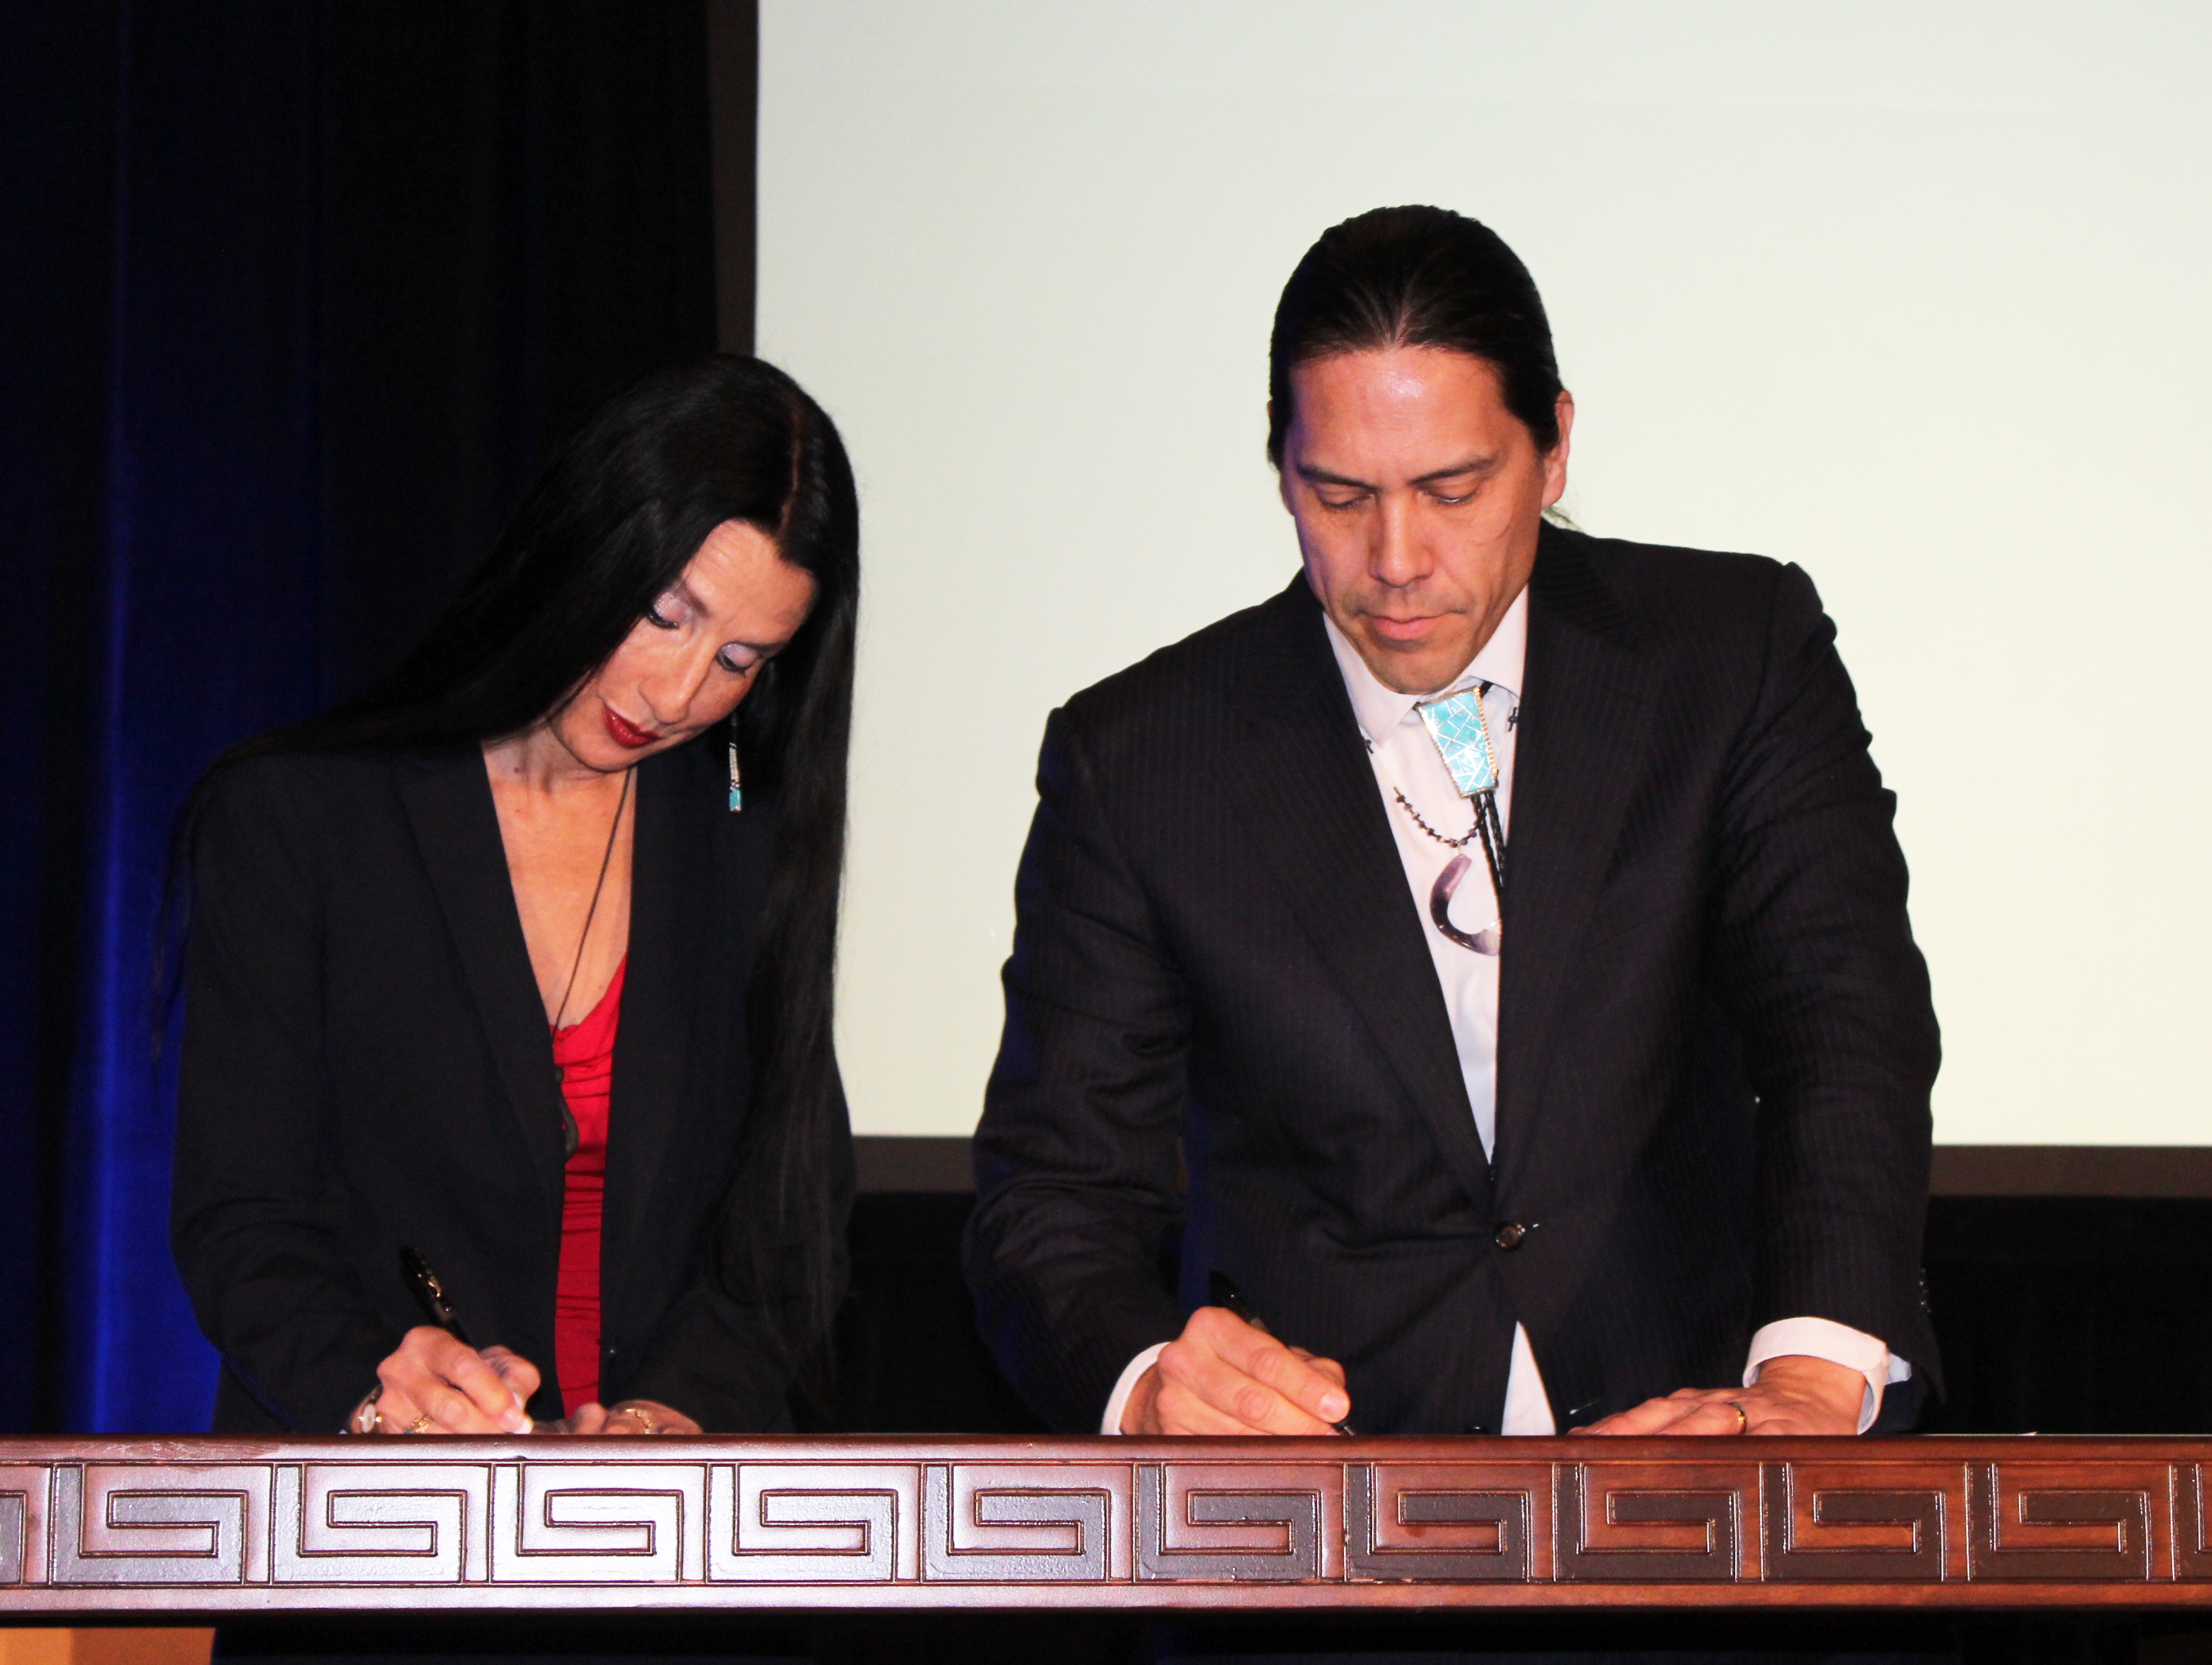 ASU AIPI-NAFOA collaborative agreement signing